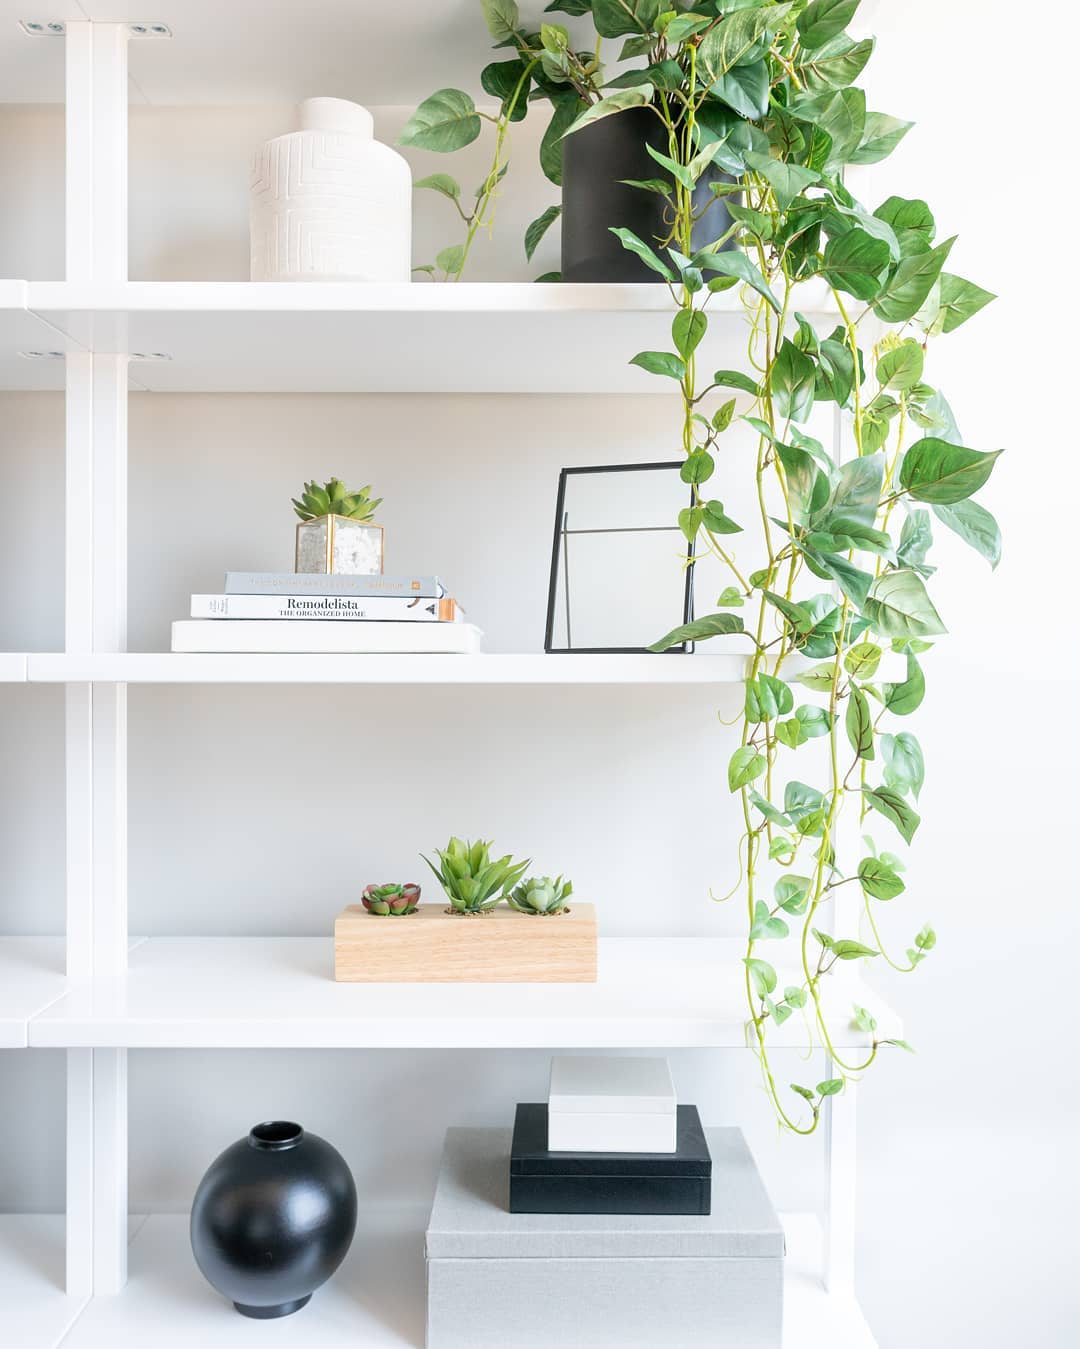 Vertical shelving with minimalist decor. Photo by Instagram user @vivandtim.home